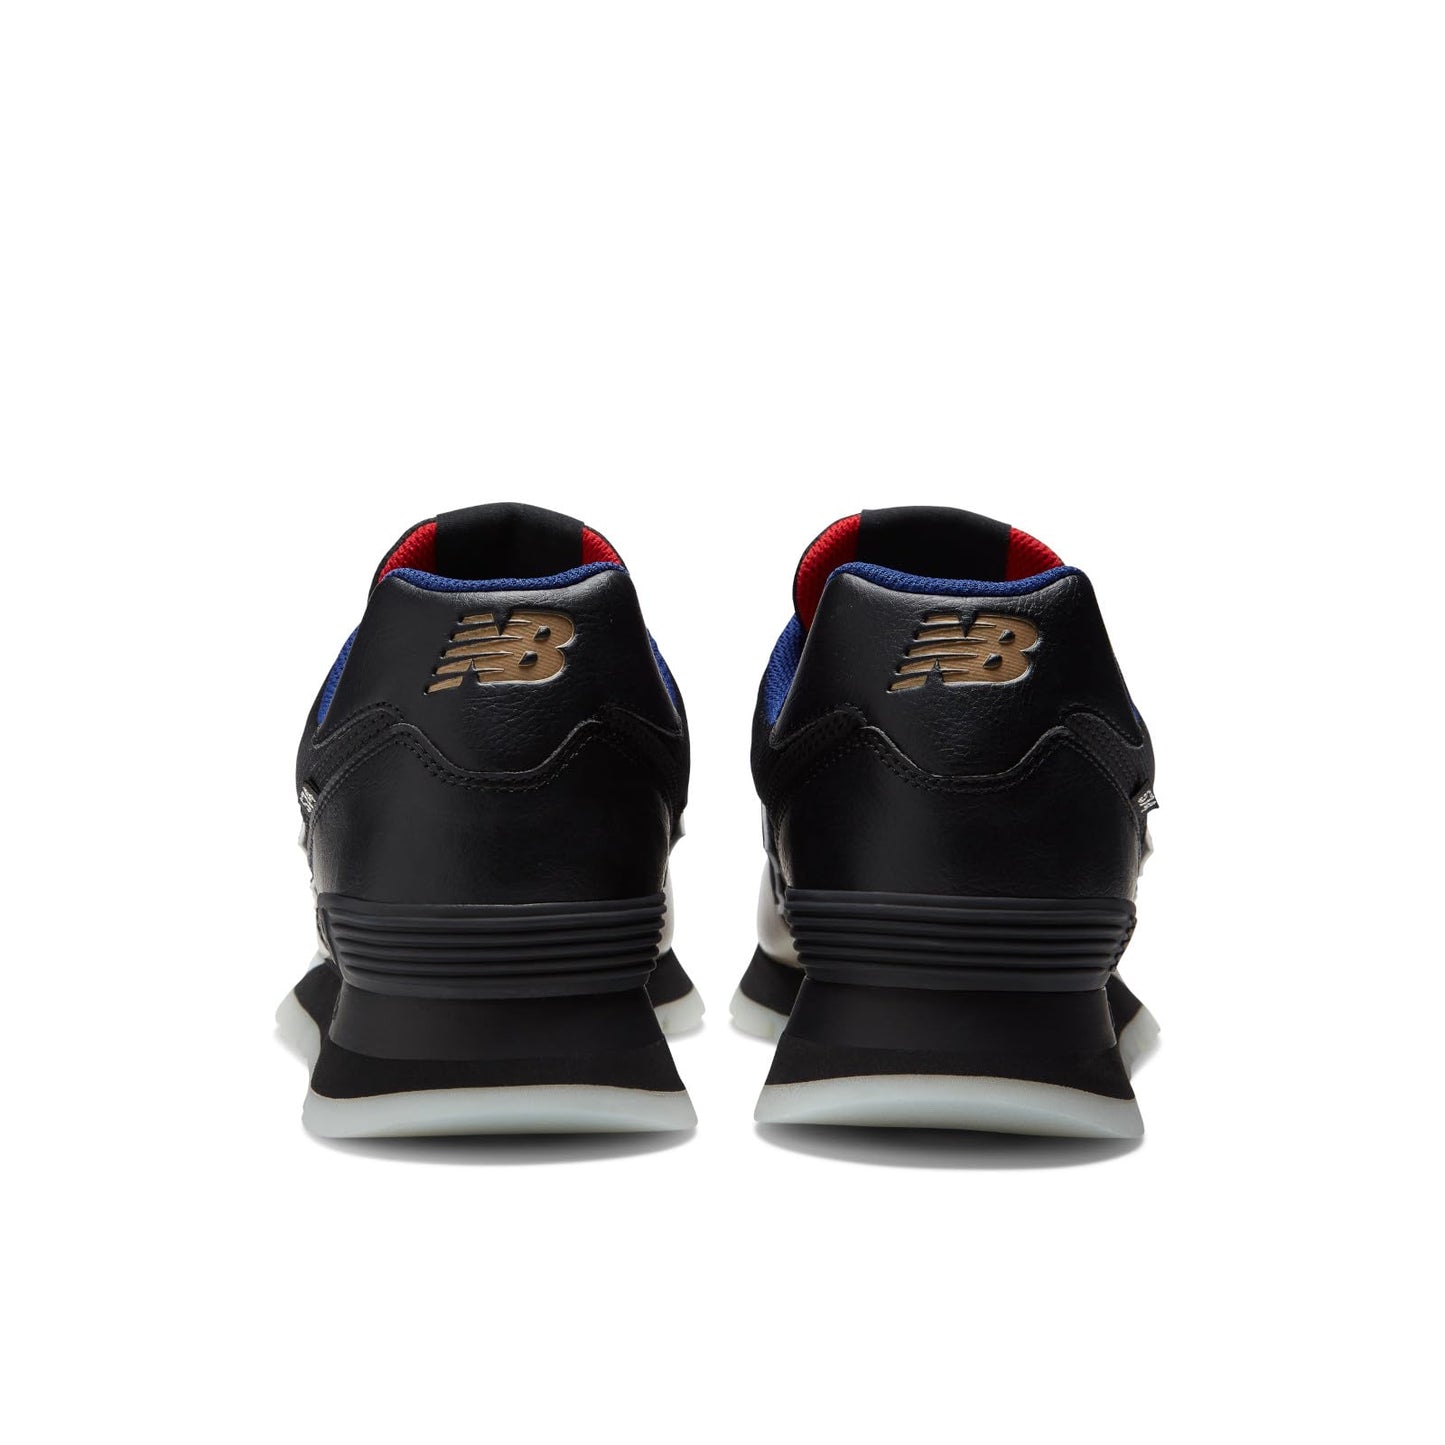 new balance Men 574 Black Sneakers - Size:10.5